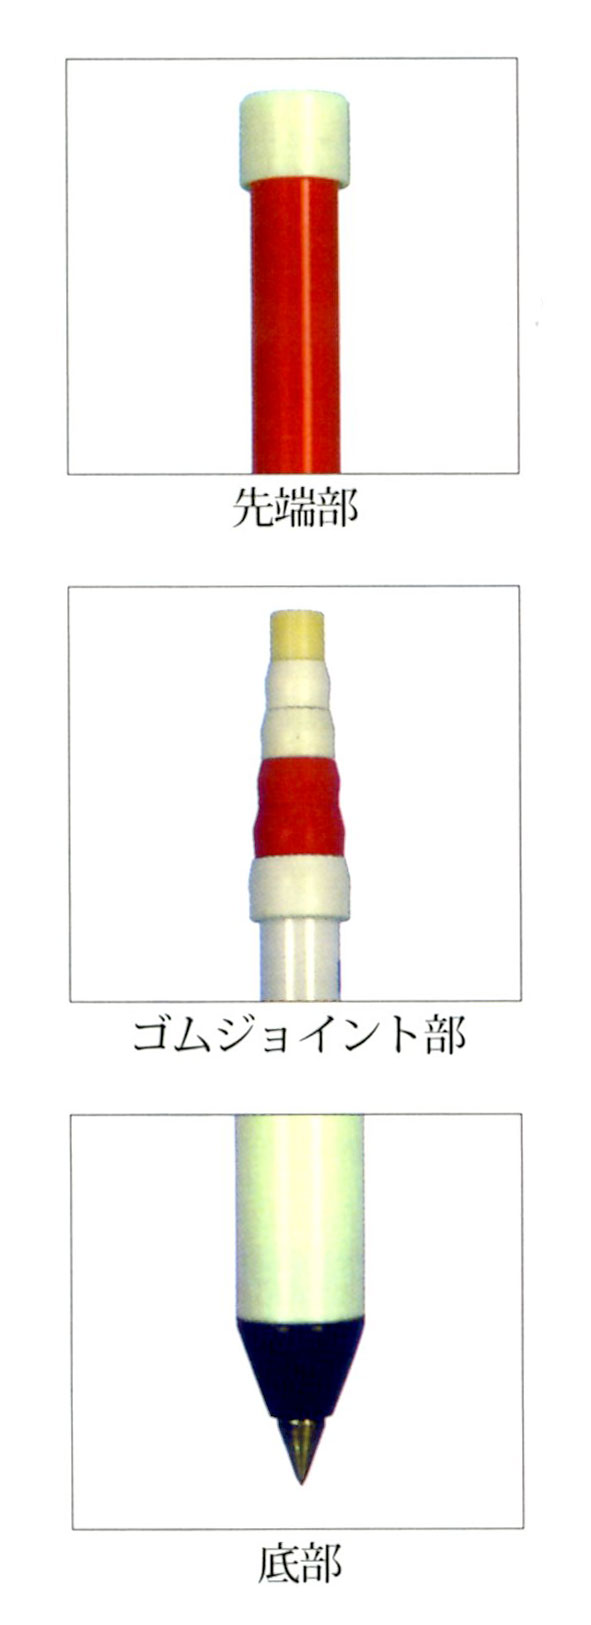 Ea7mf 24 3 0m 測量用伸縮ポールのページ Sakkey エスコの商品を検索